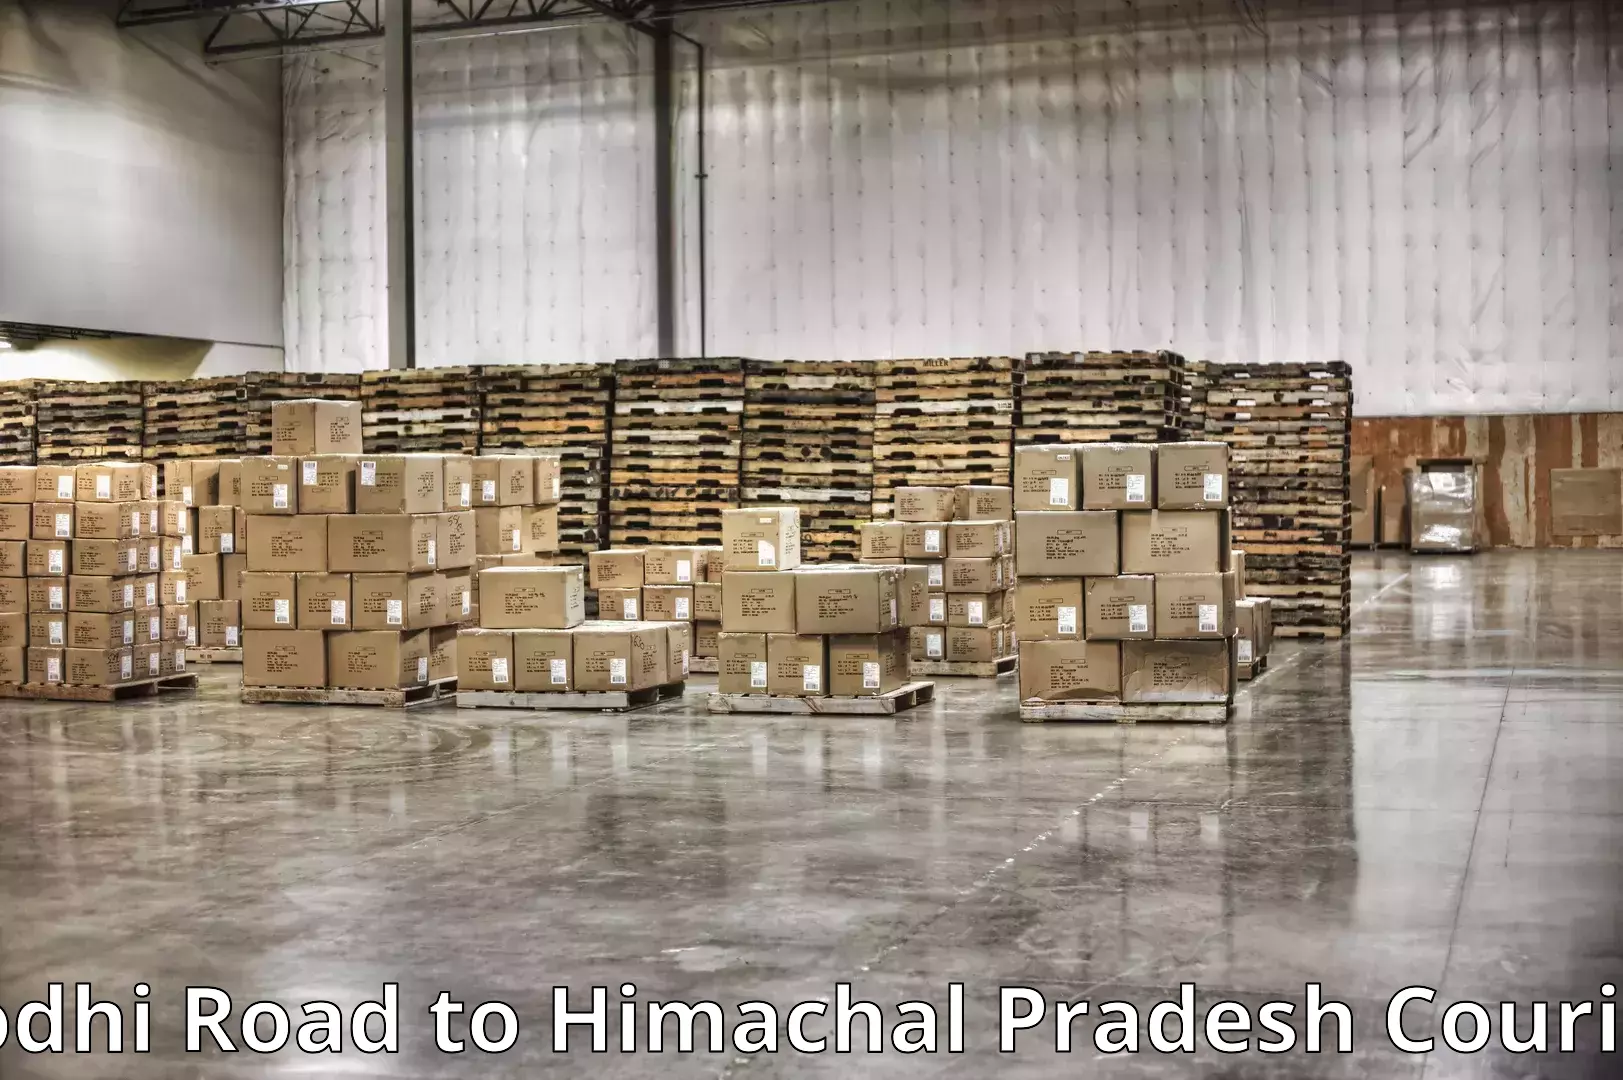 Household moving strategies Lodhi Road to Una Himachal Pradesh